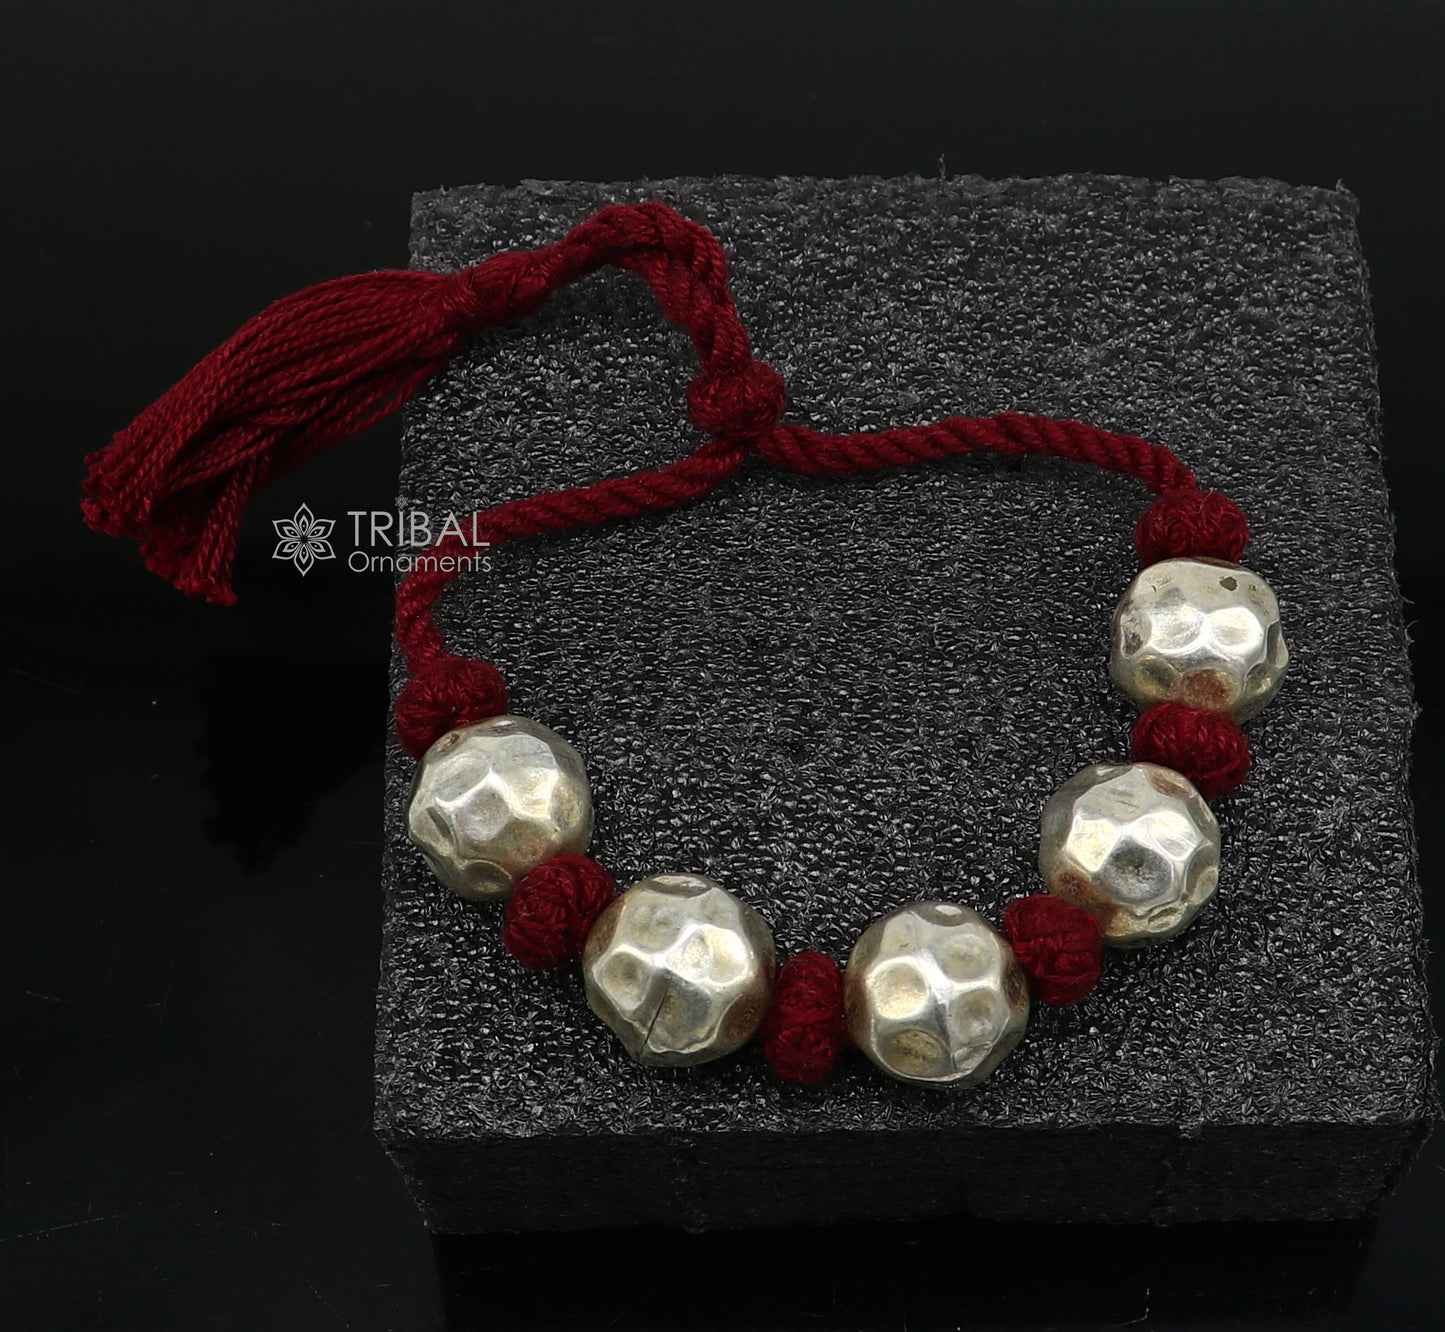 925 sterling silver vintage customized stylish beads bracelet, adjustable brides gifting wedding ethnic bracelet tribal jewelry sbr684 - TRIBAL ORNAMENTS